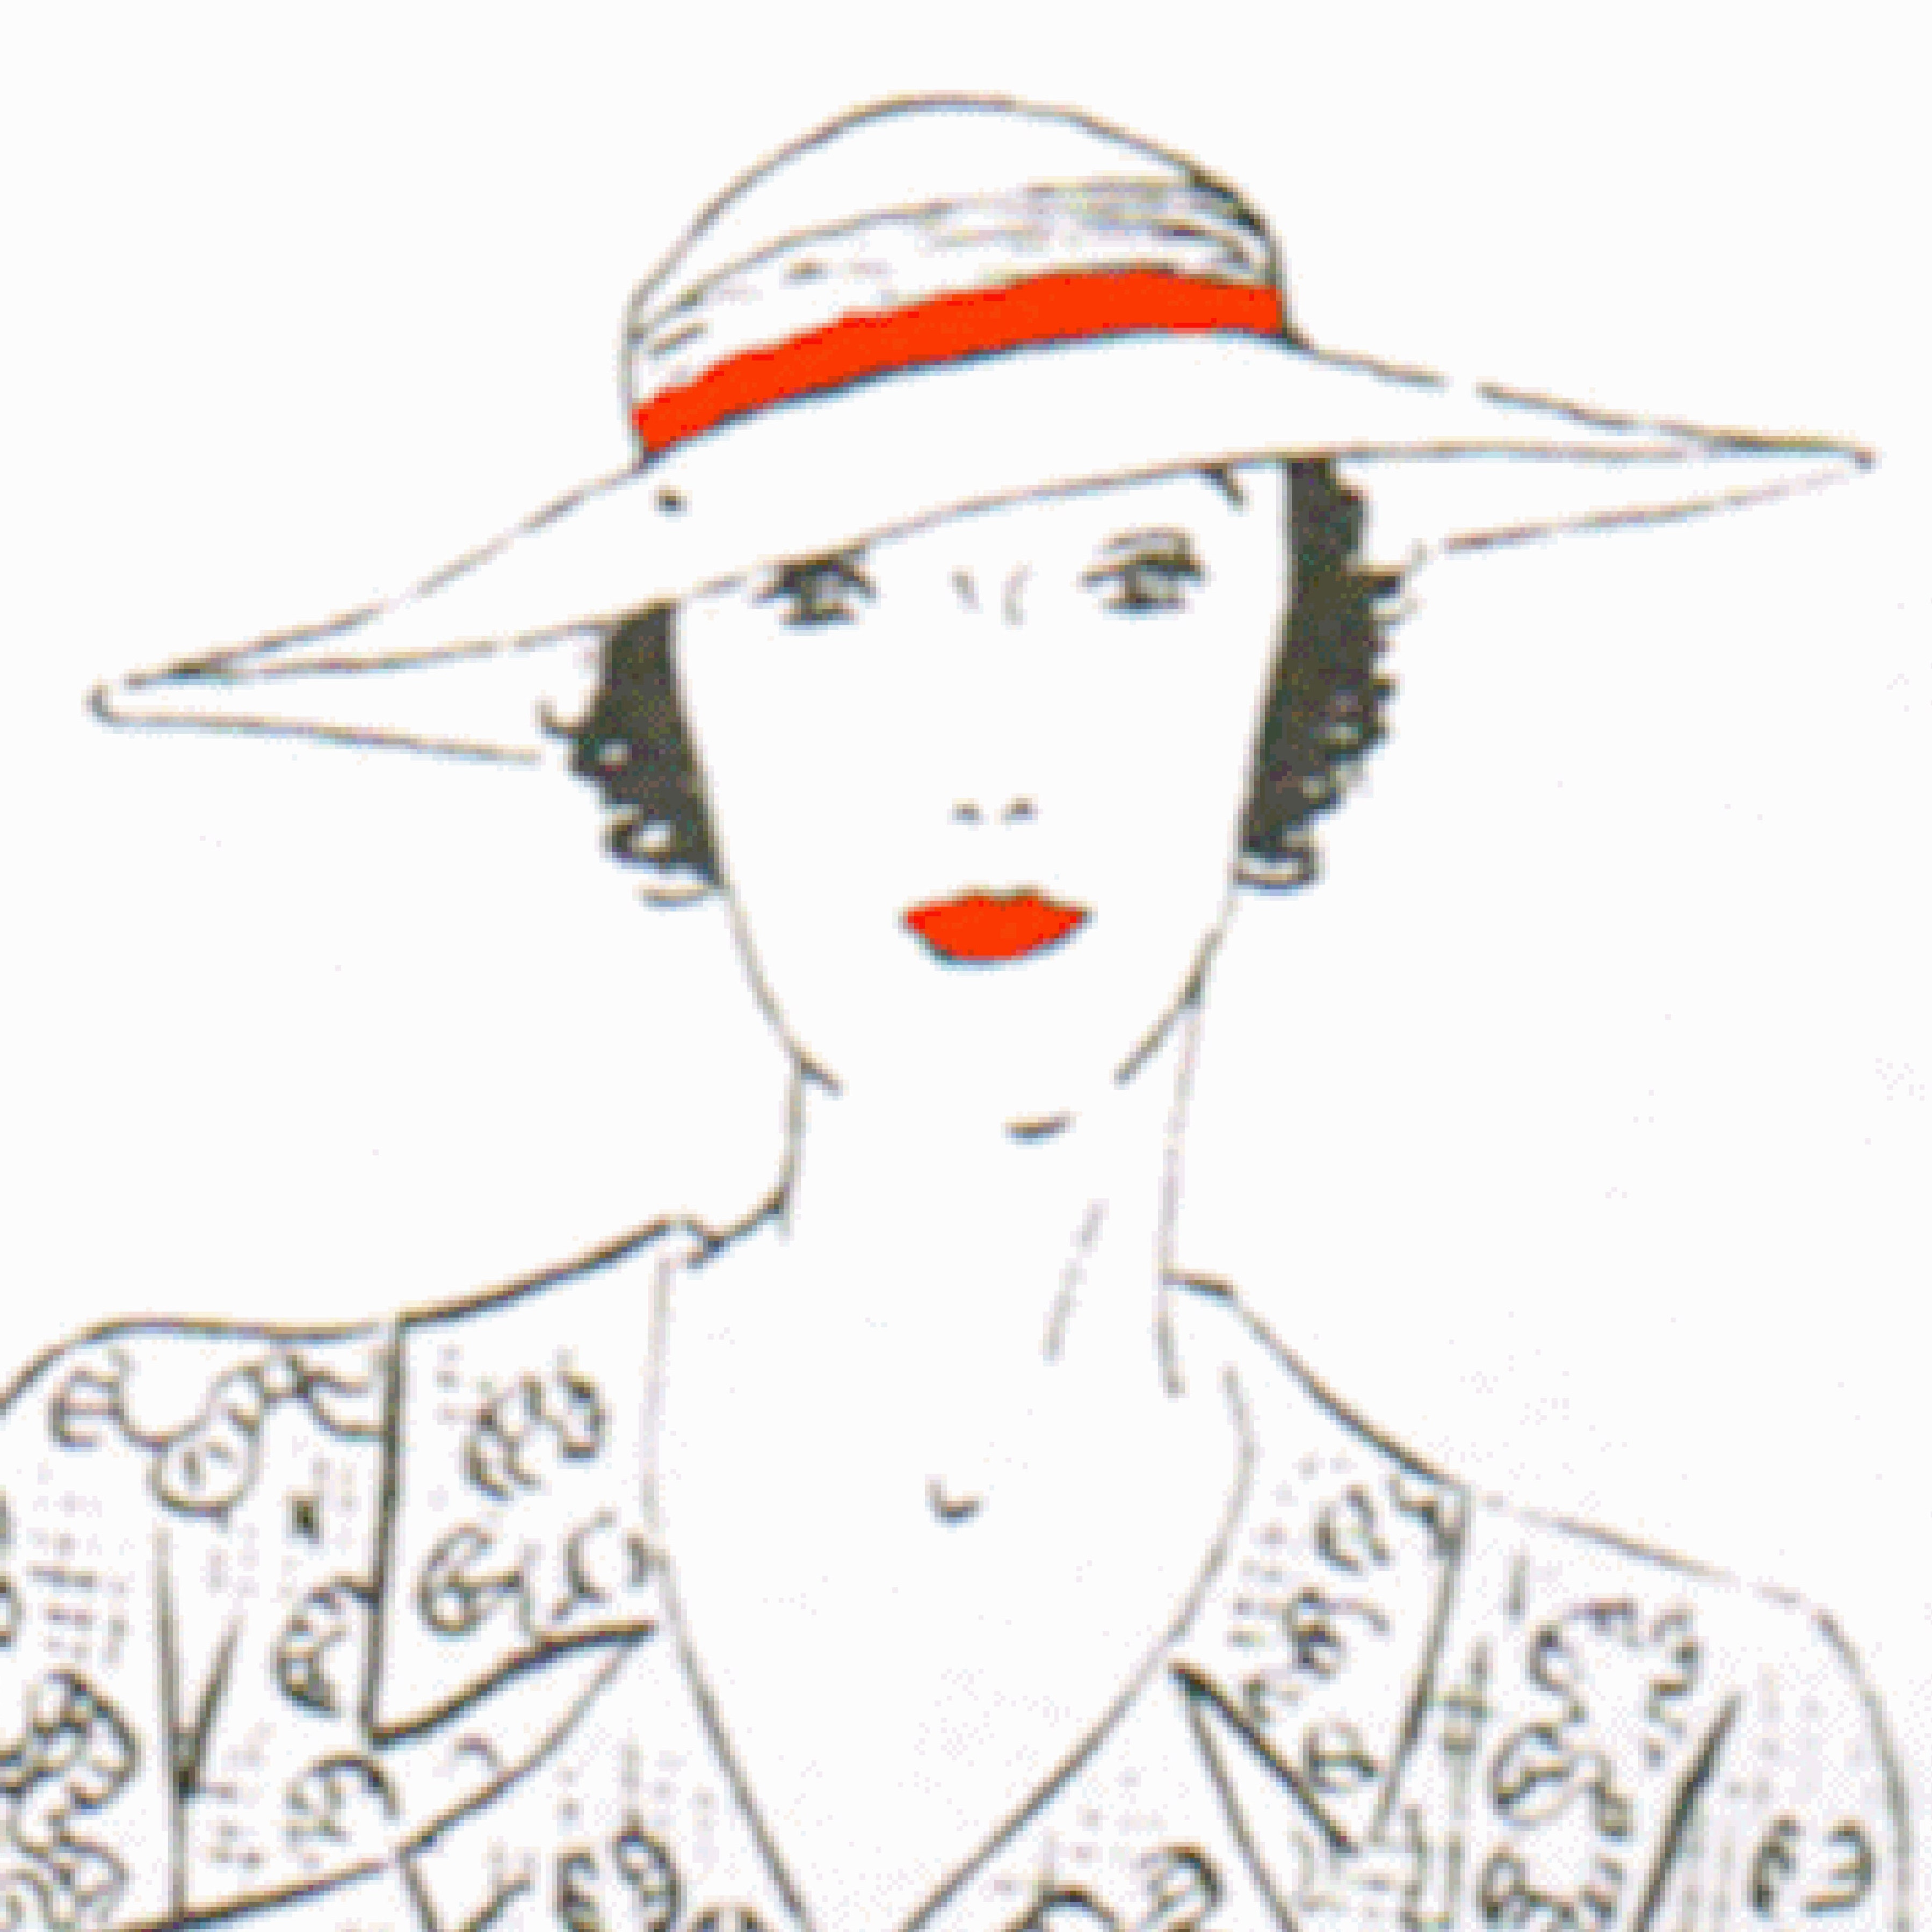 1980s Womens Dress Princess Seams and Dropped Waist Mccalls Sewing Pattern  4335 Size 14 Bust 36 FF -  Israel